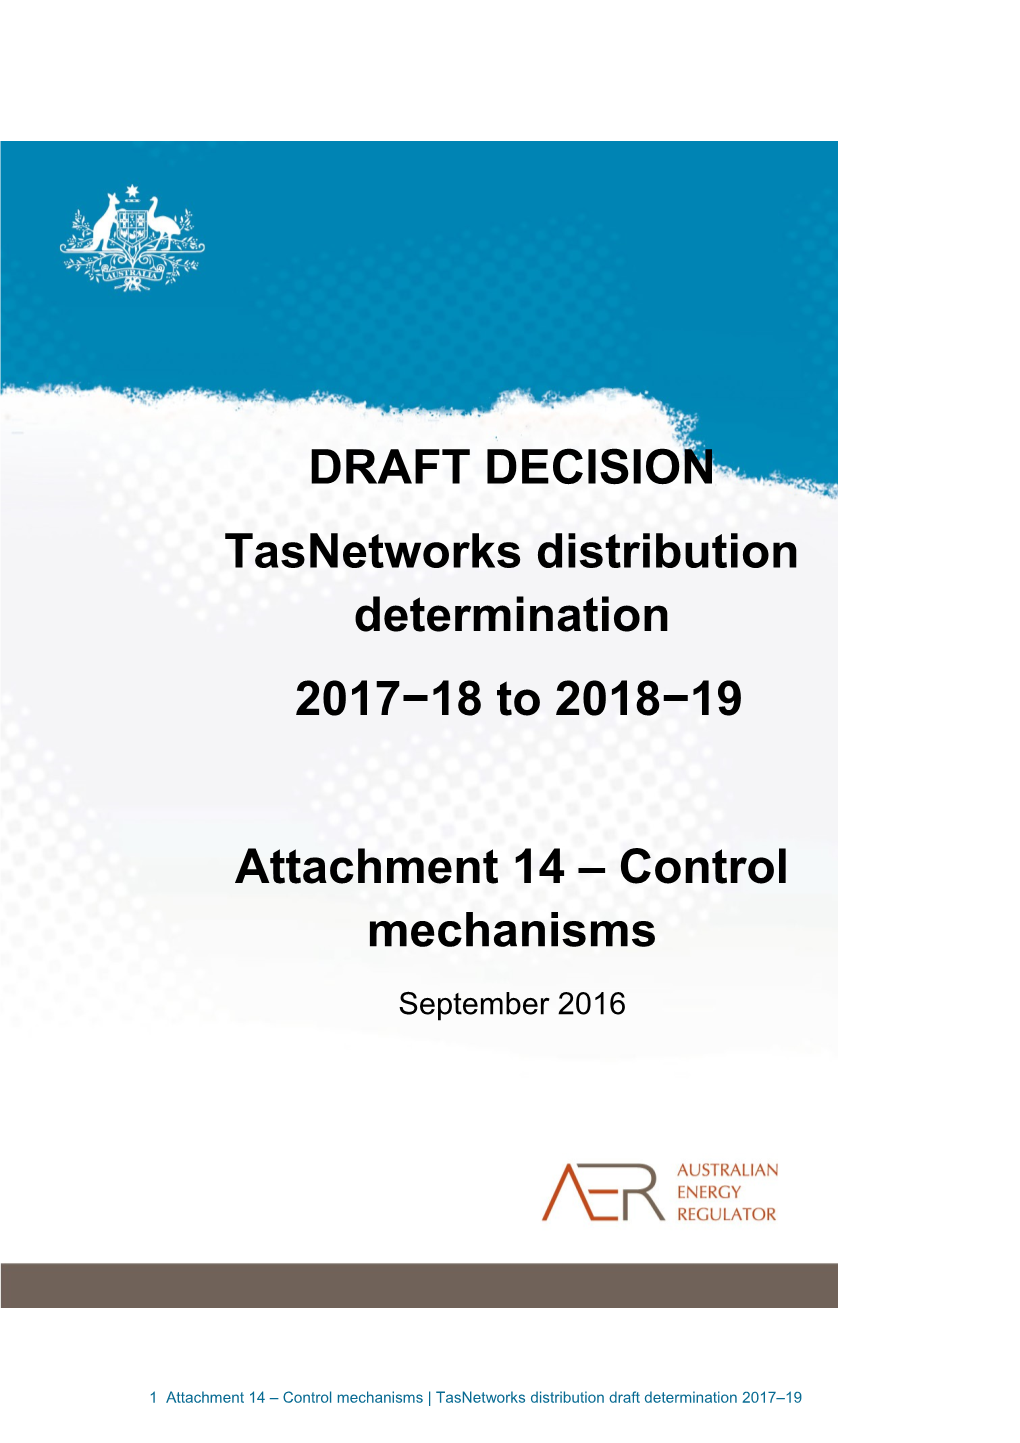 AER Draft Decision - Tasnetworks - Attachment 14 - Control Mechanisms